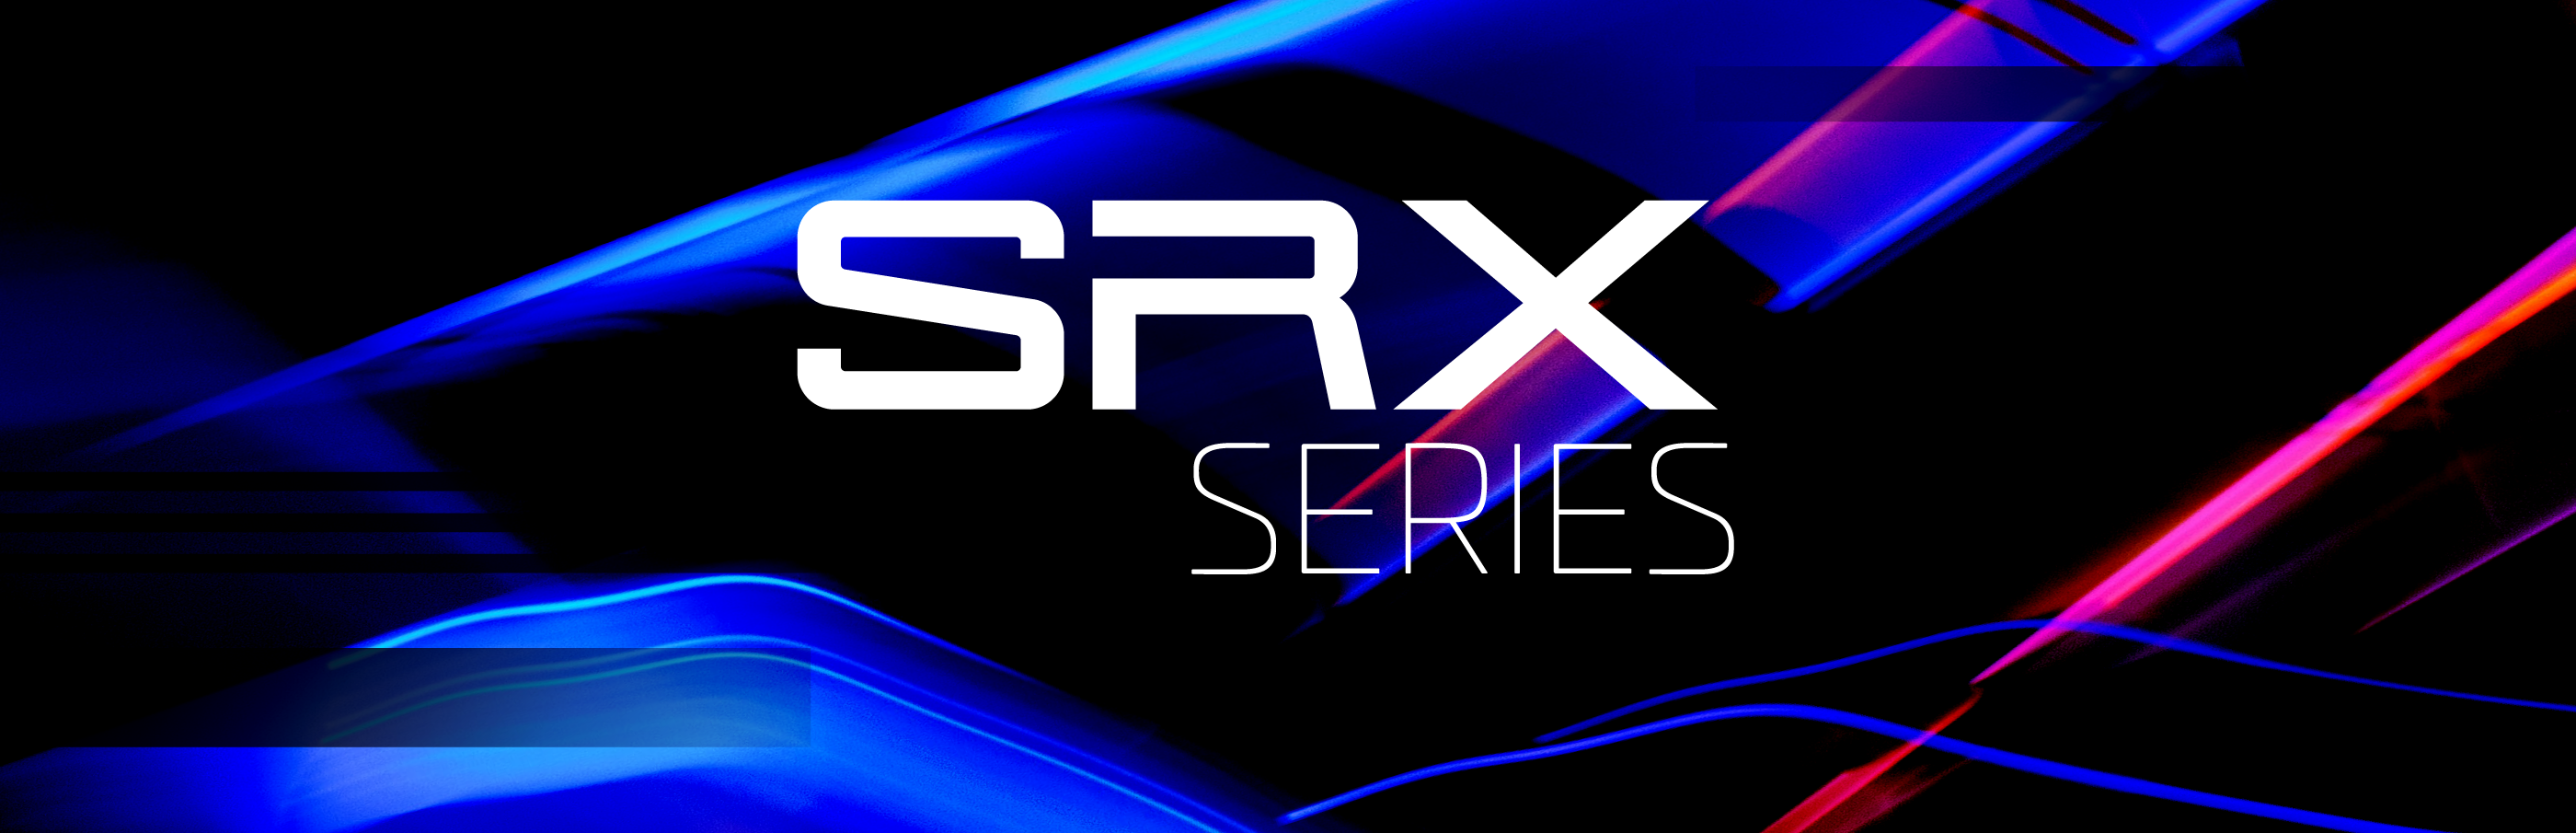 SRX-Series-CatalogBanner-1.png